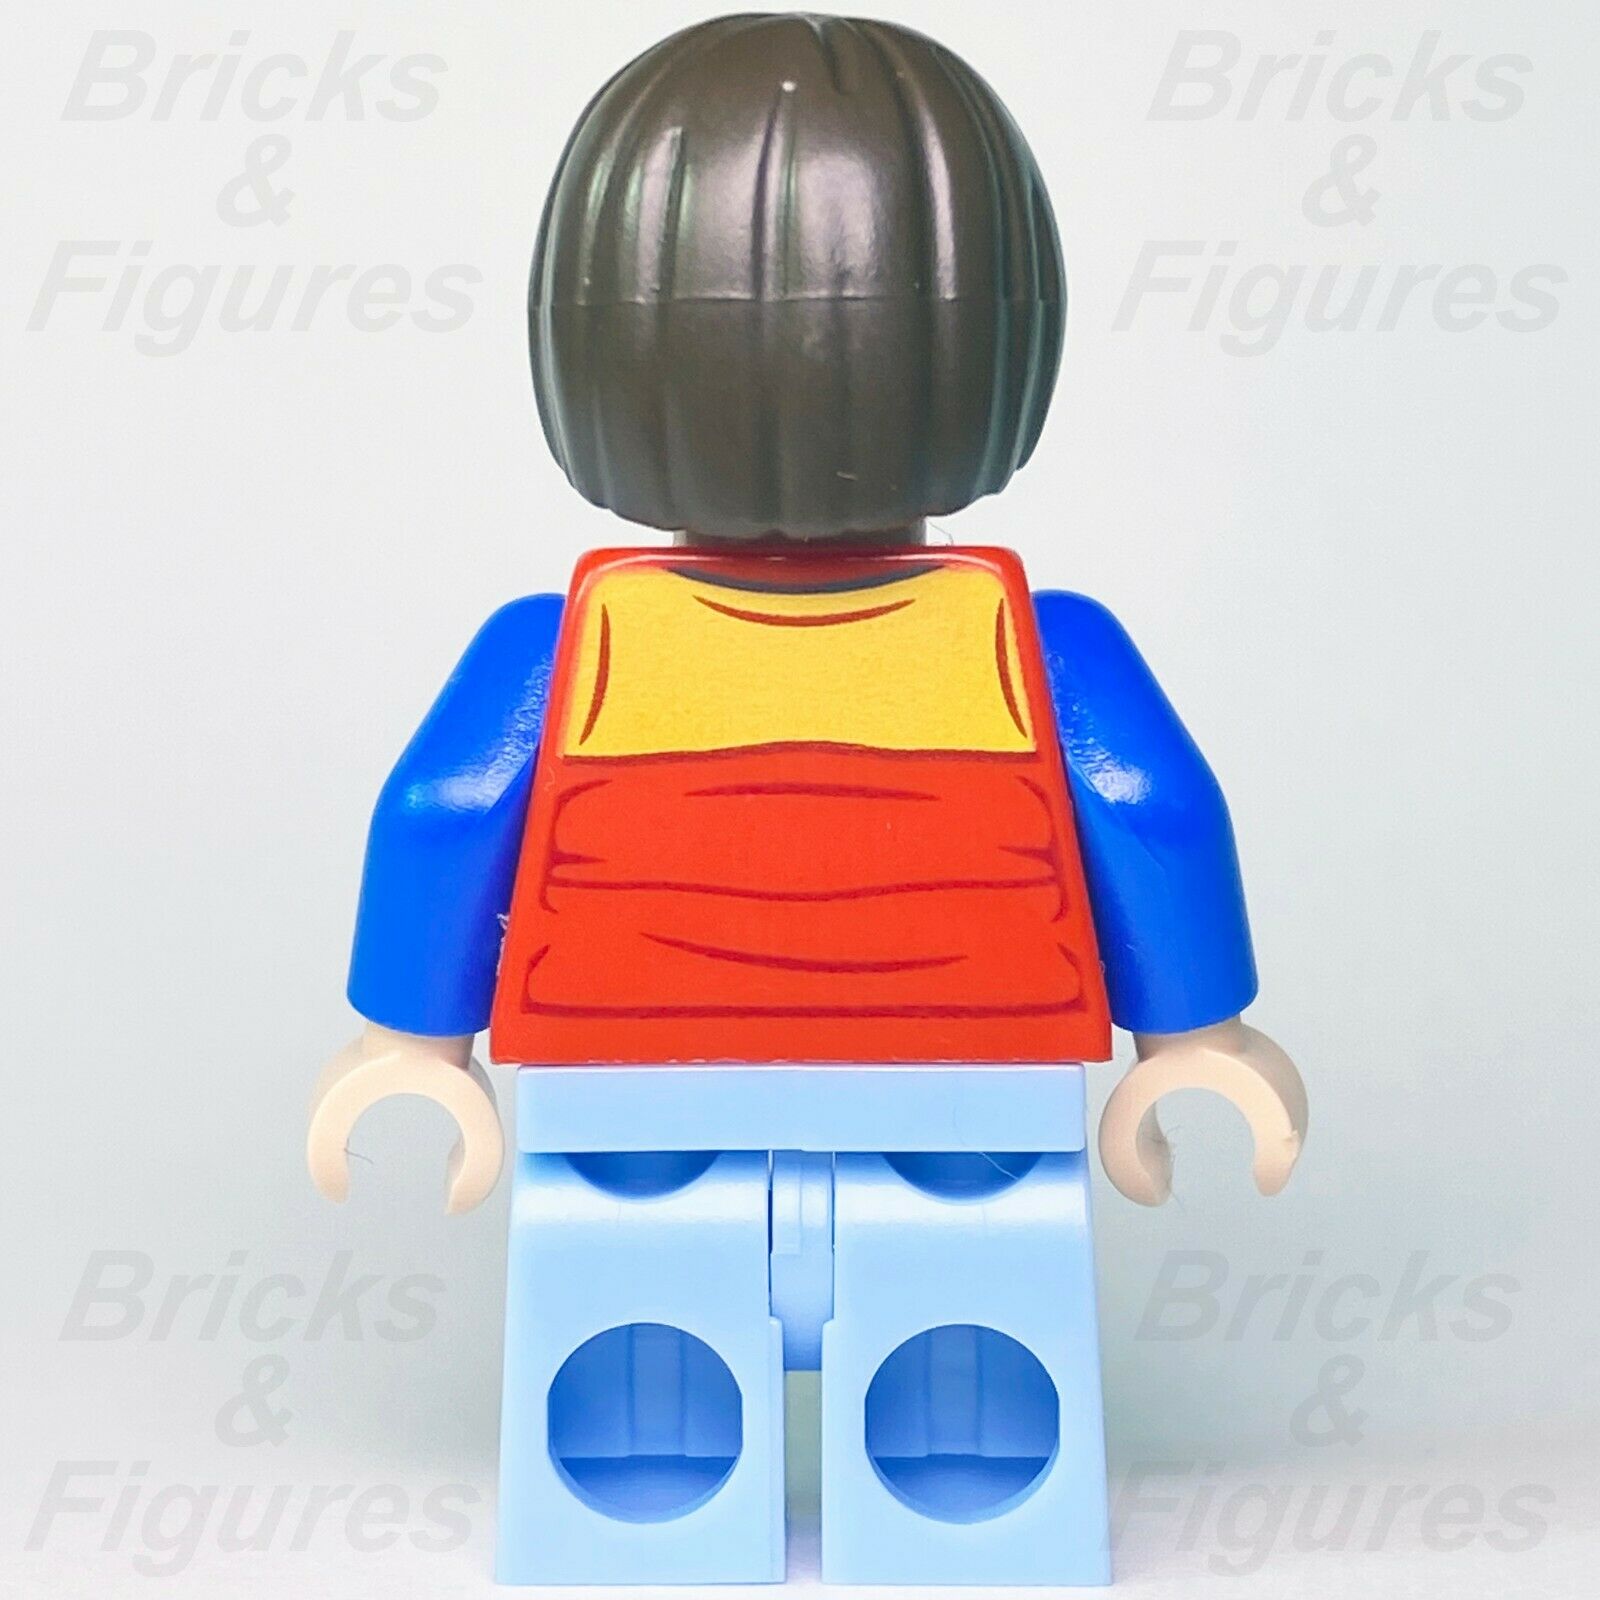 New Stranger Things LEGO Will Byers Netflix TV Series Minifigure from set 75810 - Bricks & Figures